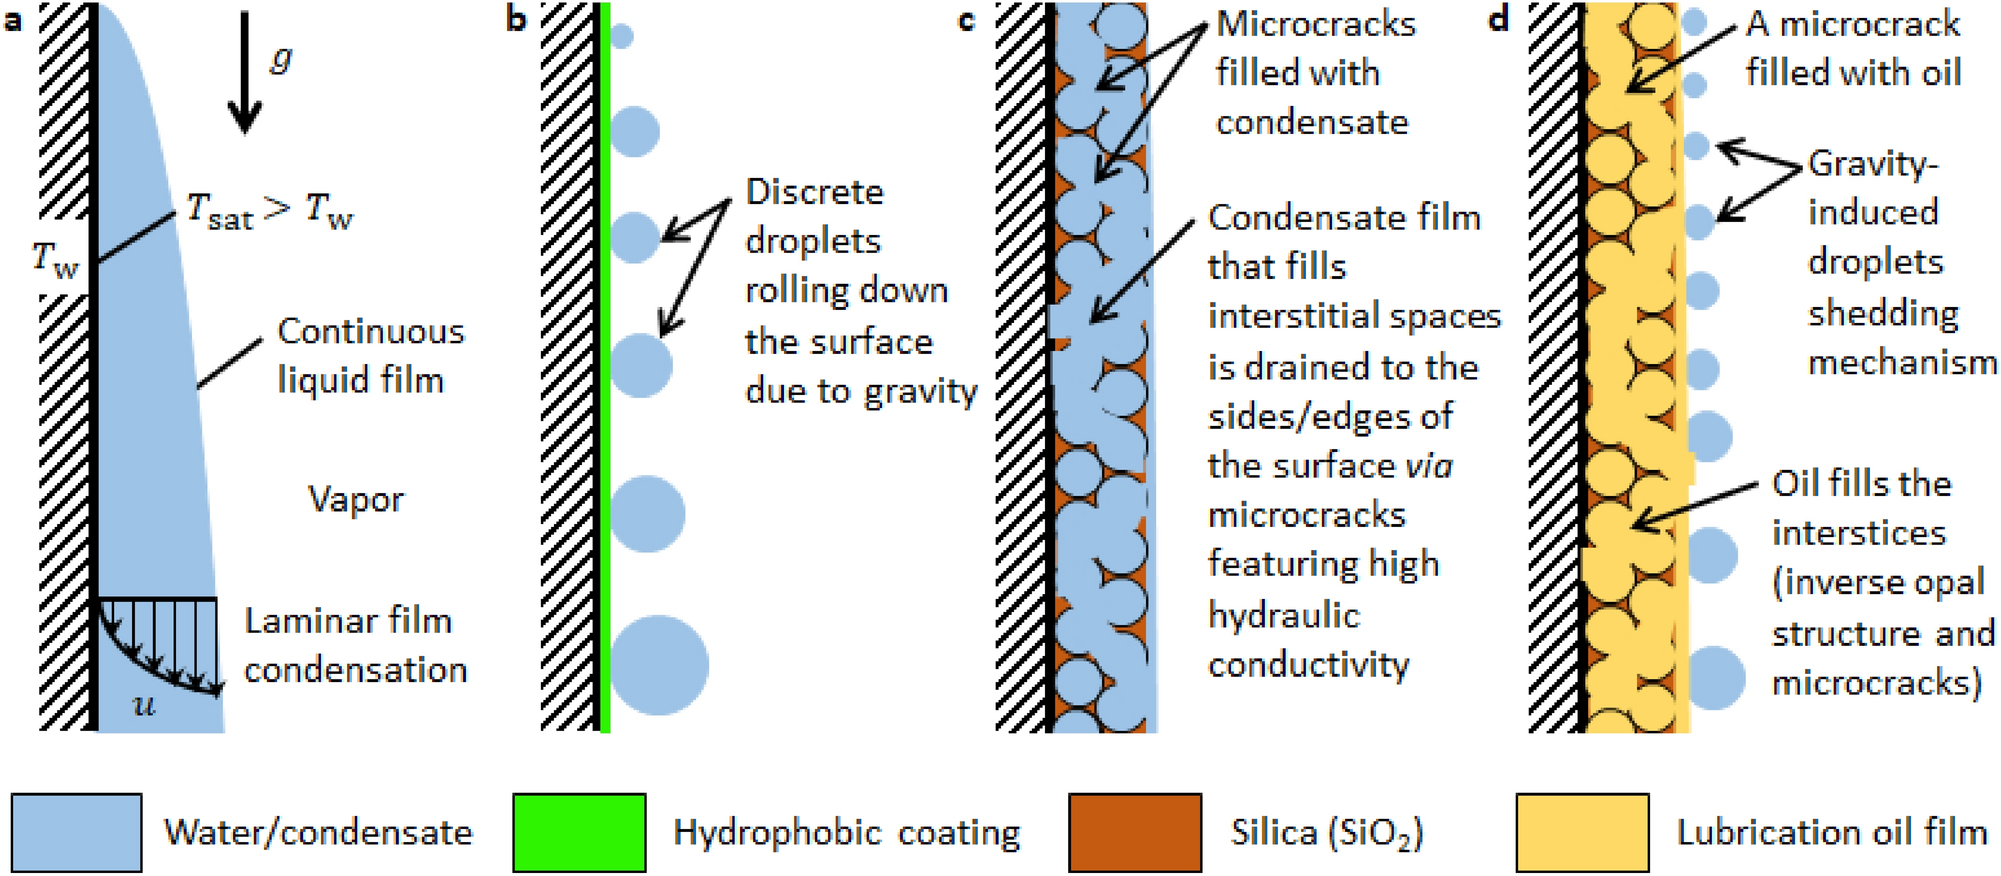 Enhanced condensation heat transfer using porous silica inverse